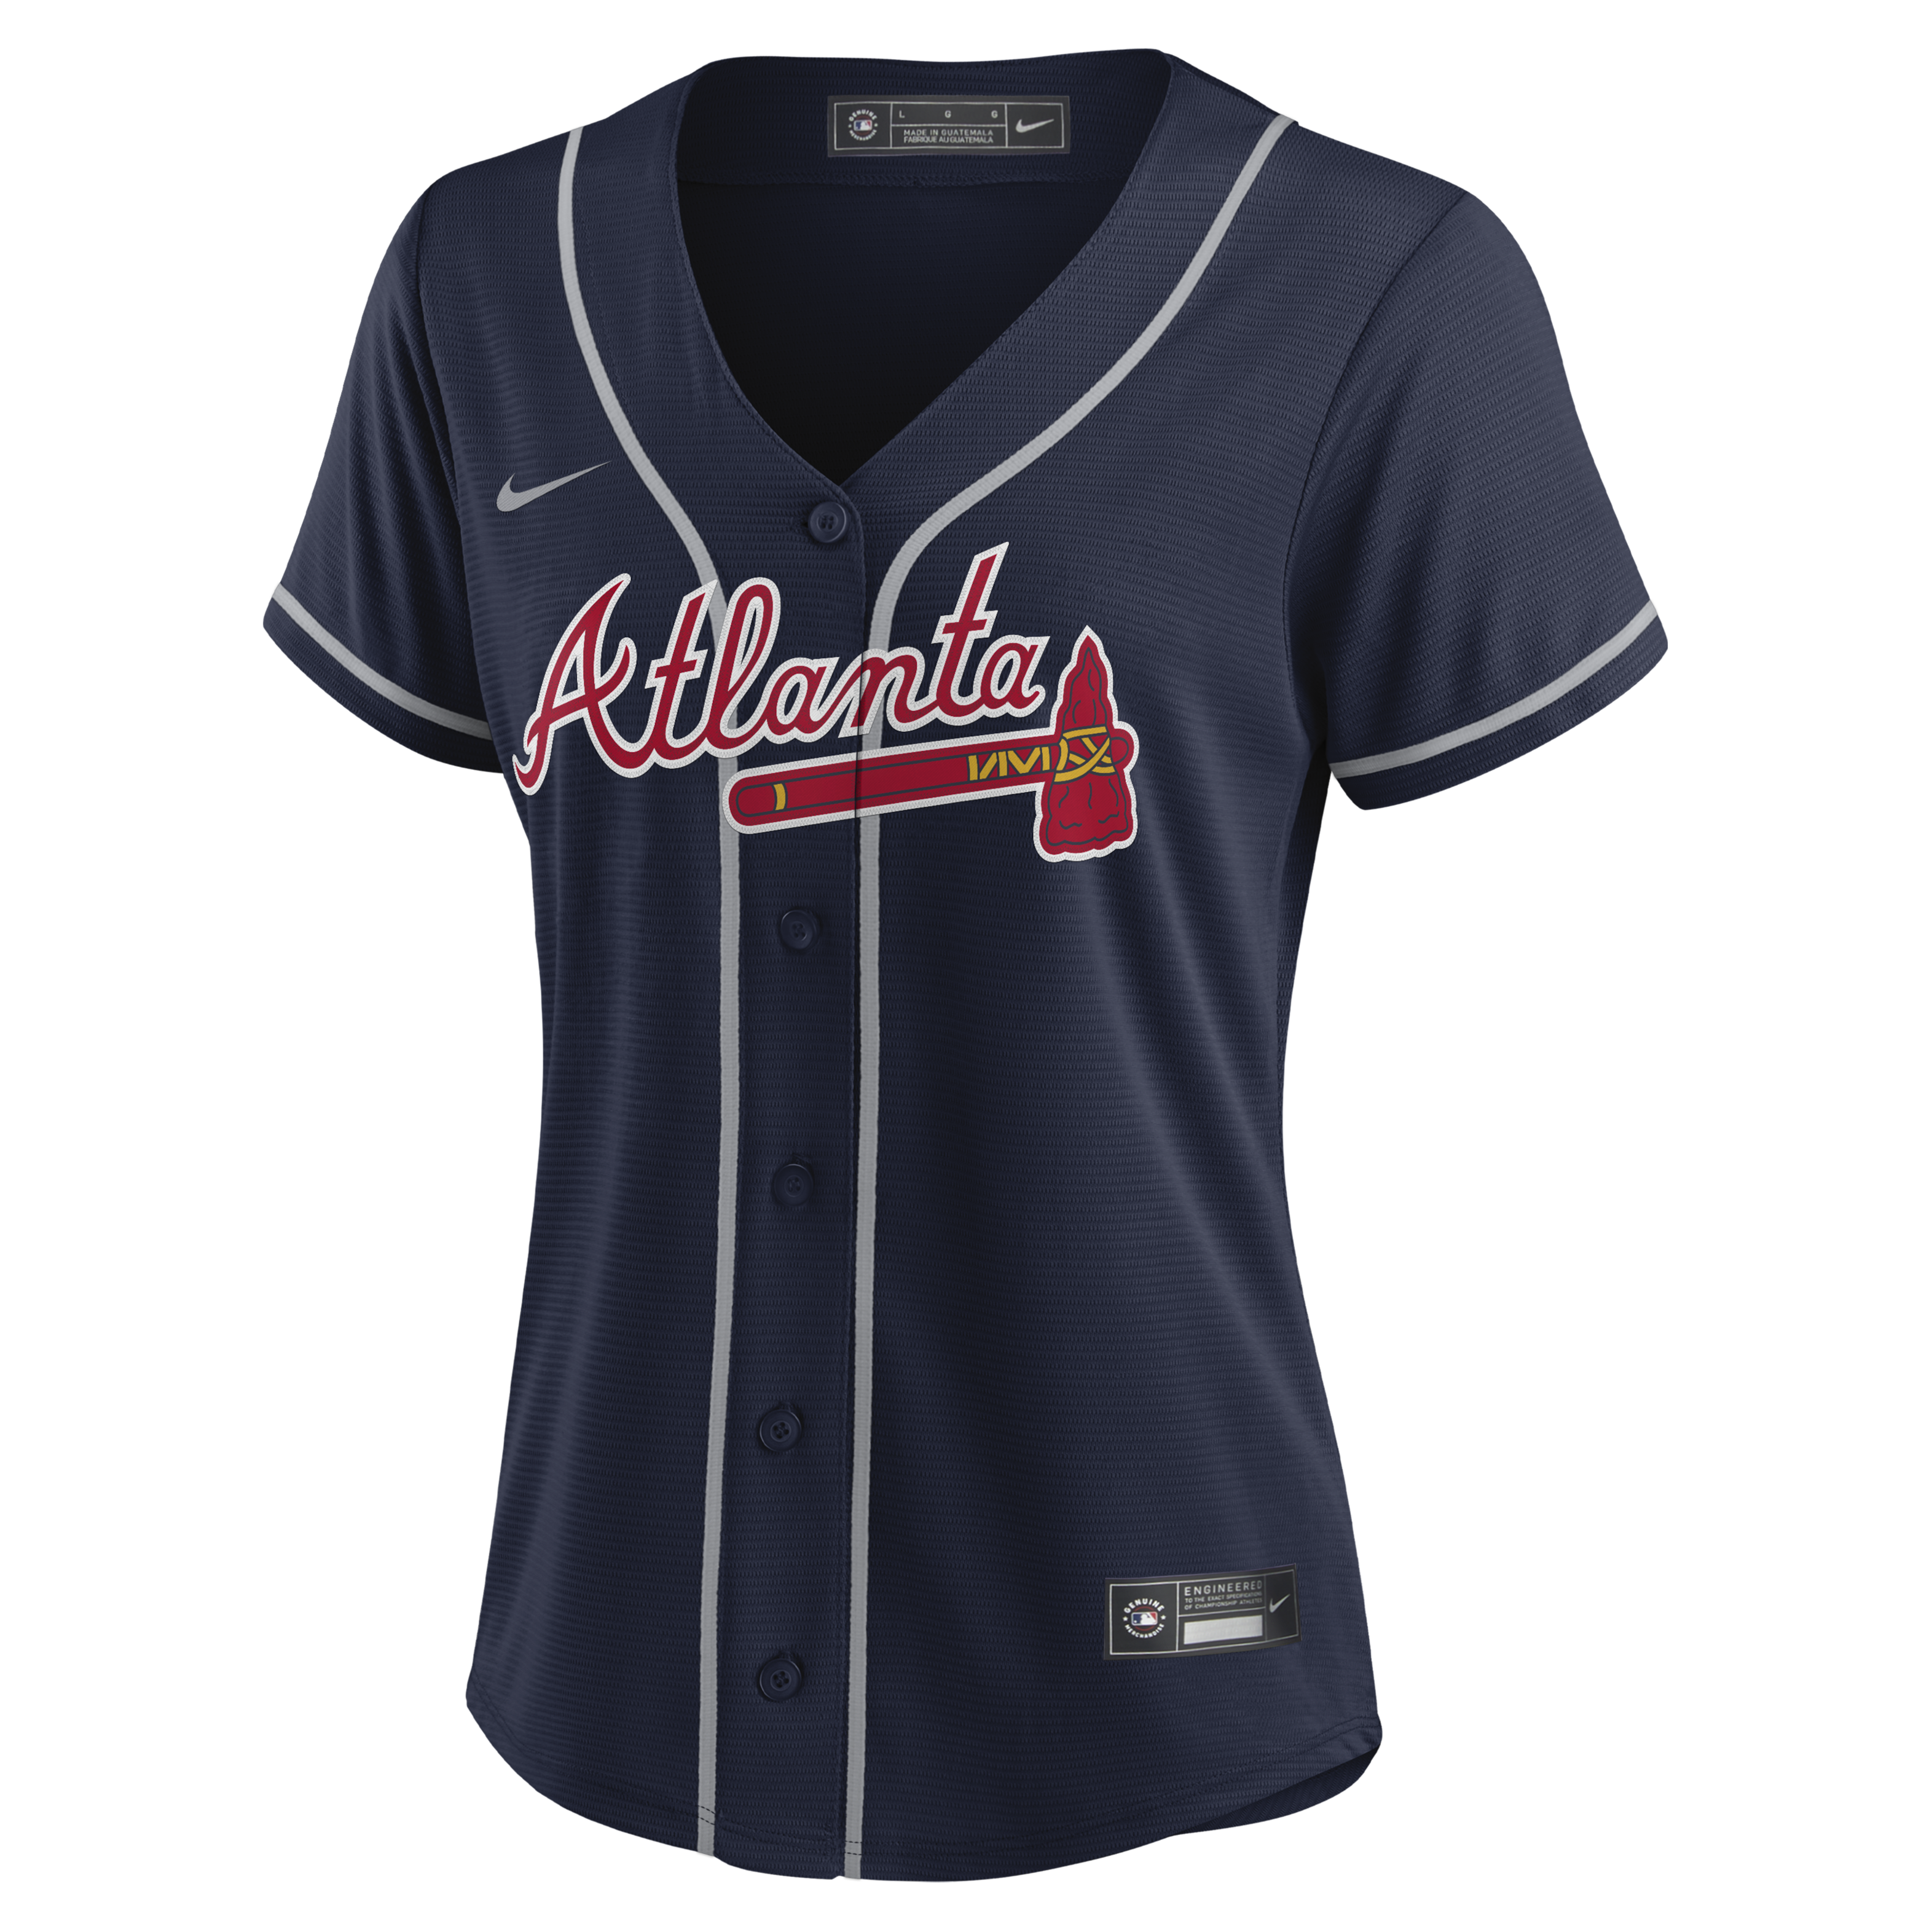 MLB Atlanta Braves (Dansby Swanson) Women's Replica Baseball Jersey. Nike .com